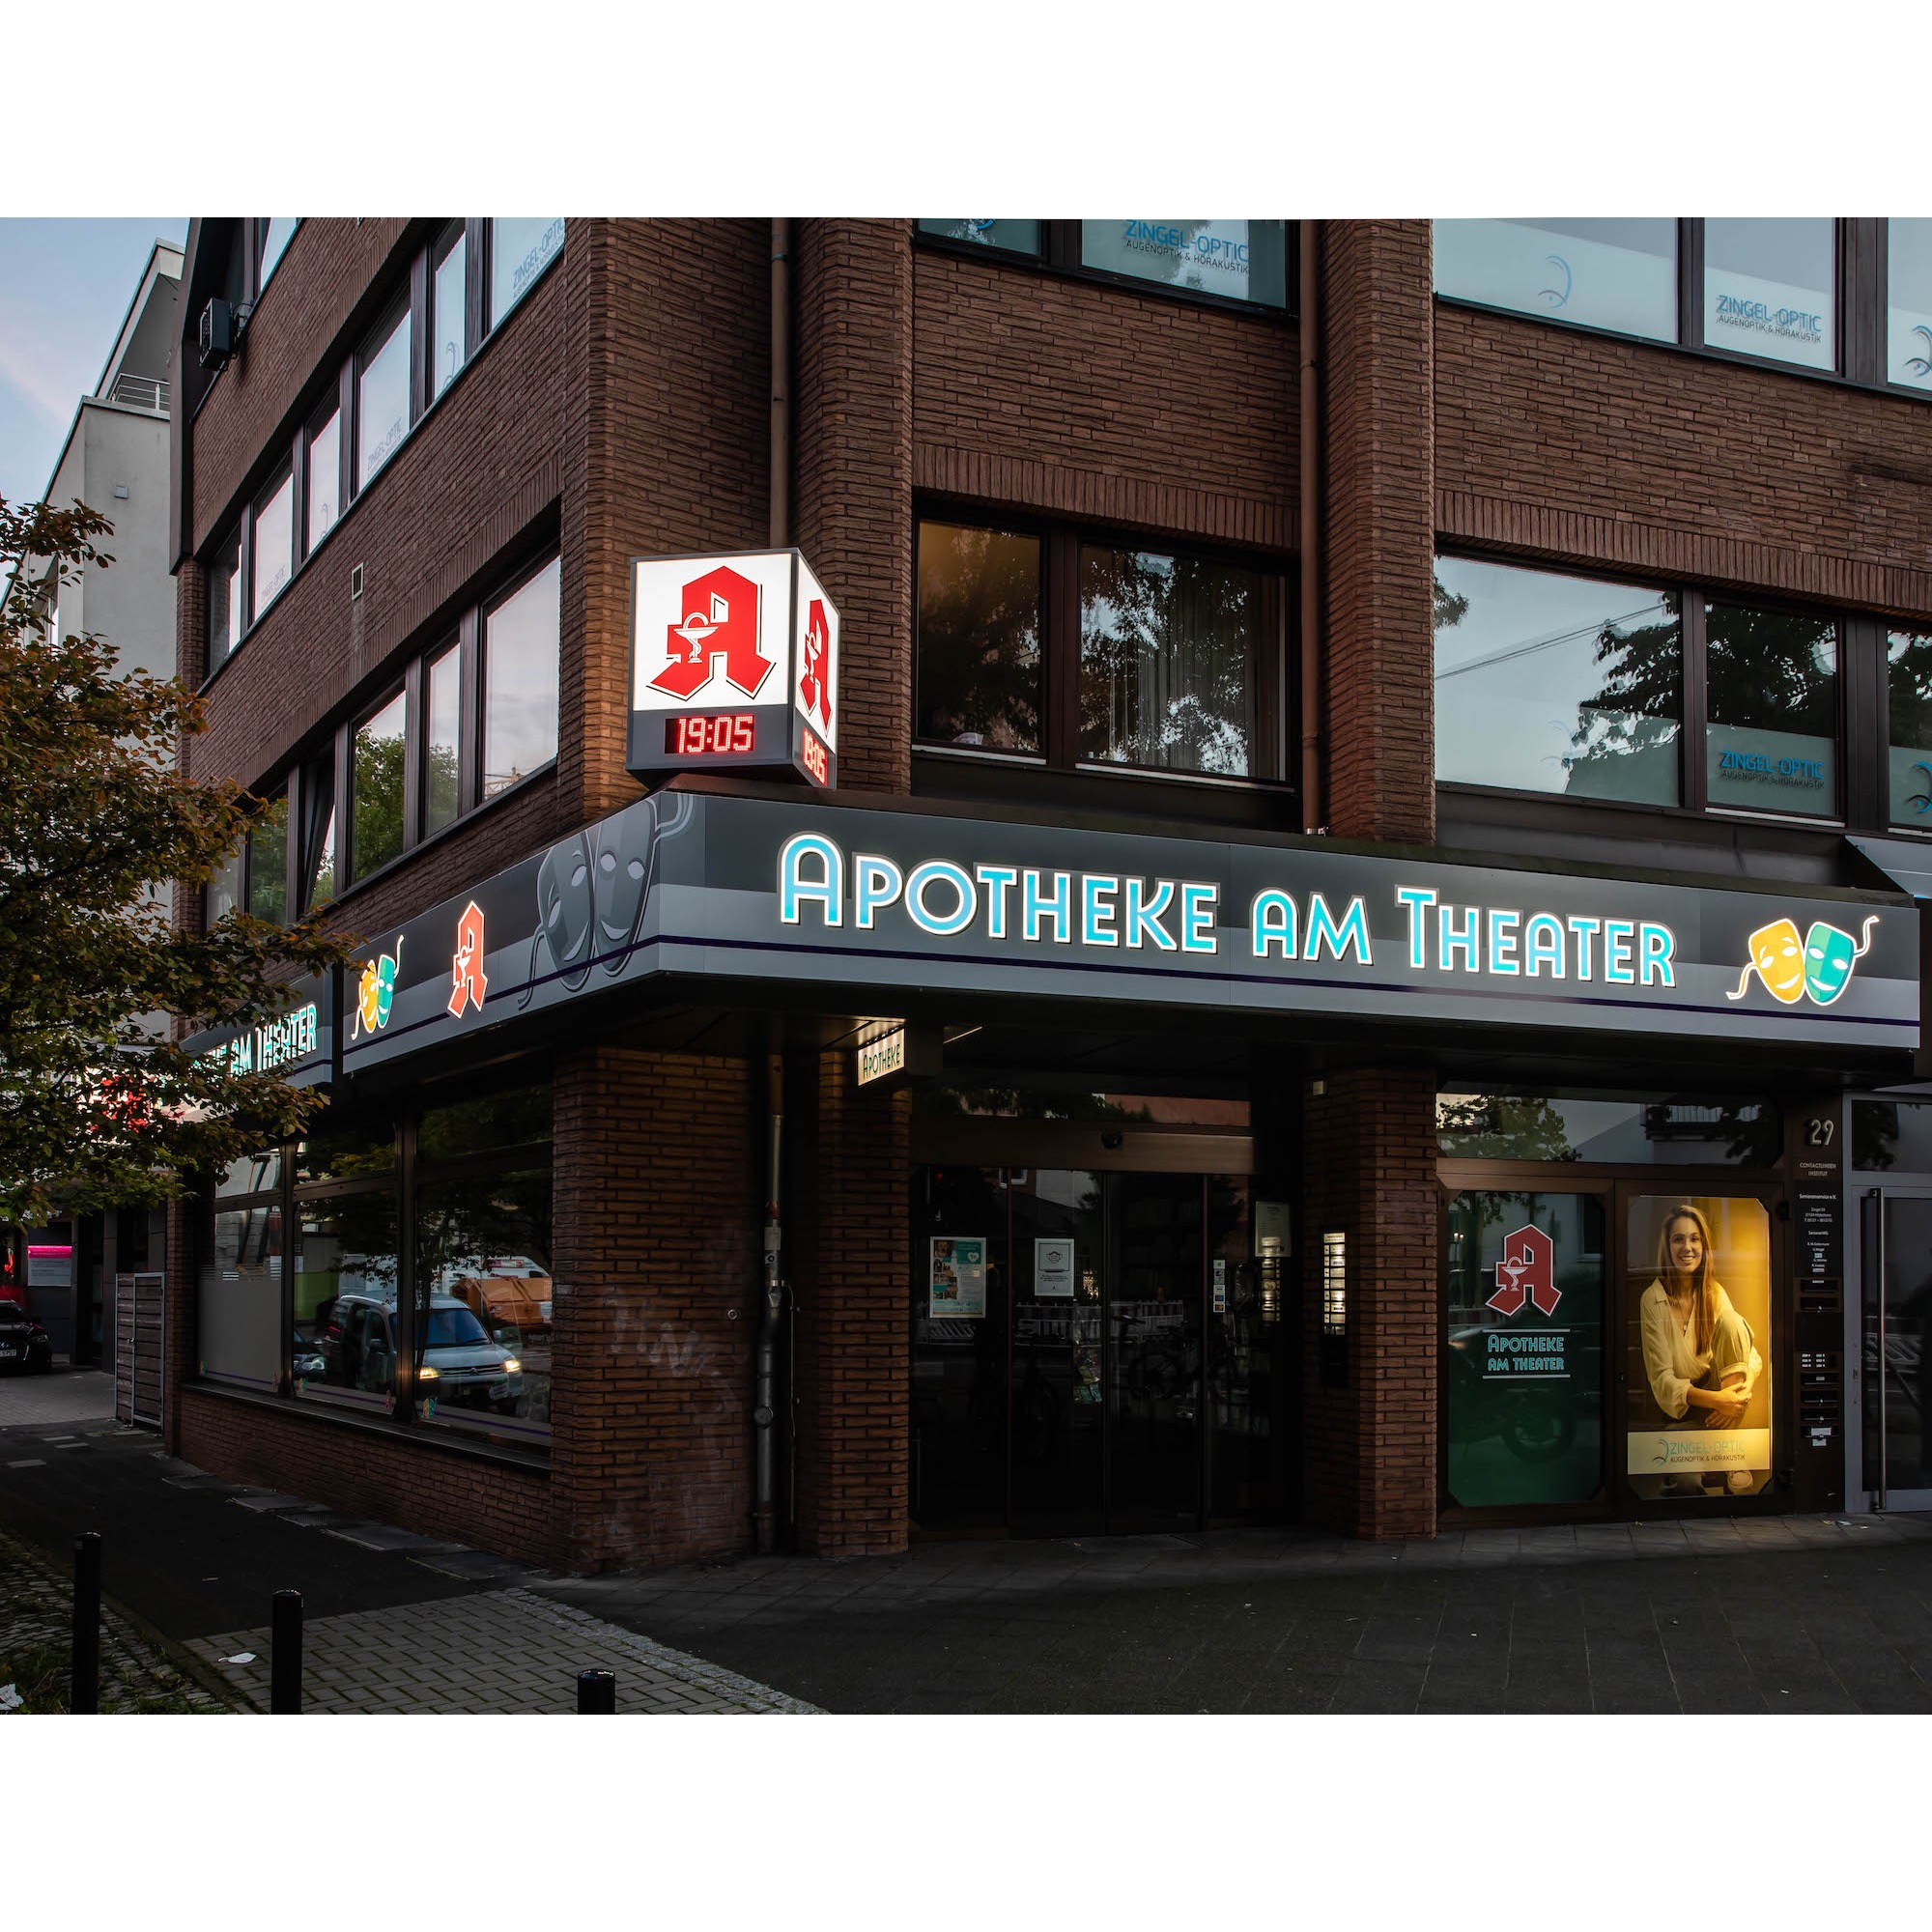 Apotheke am Theater in Hildesheim - Logo